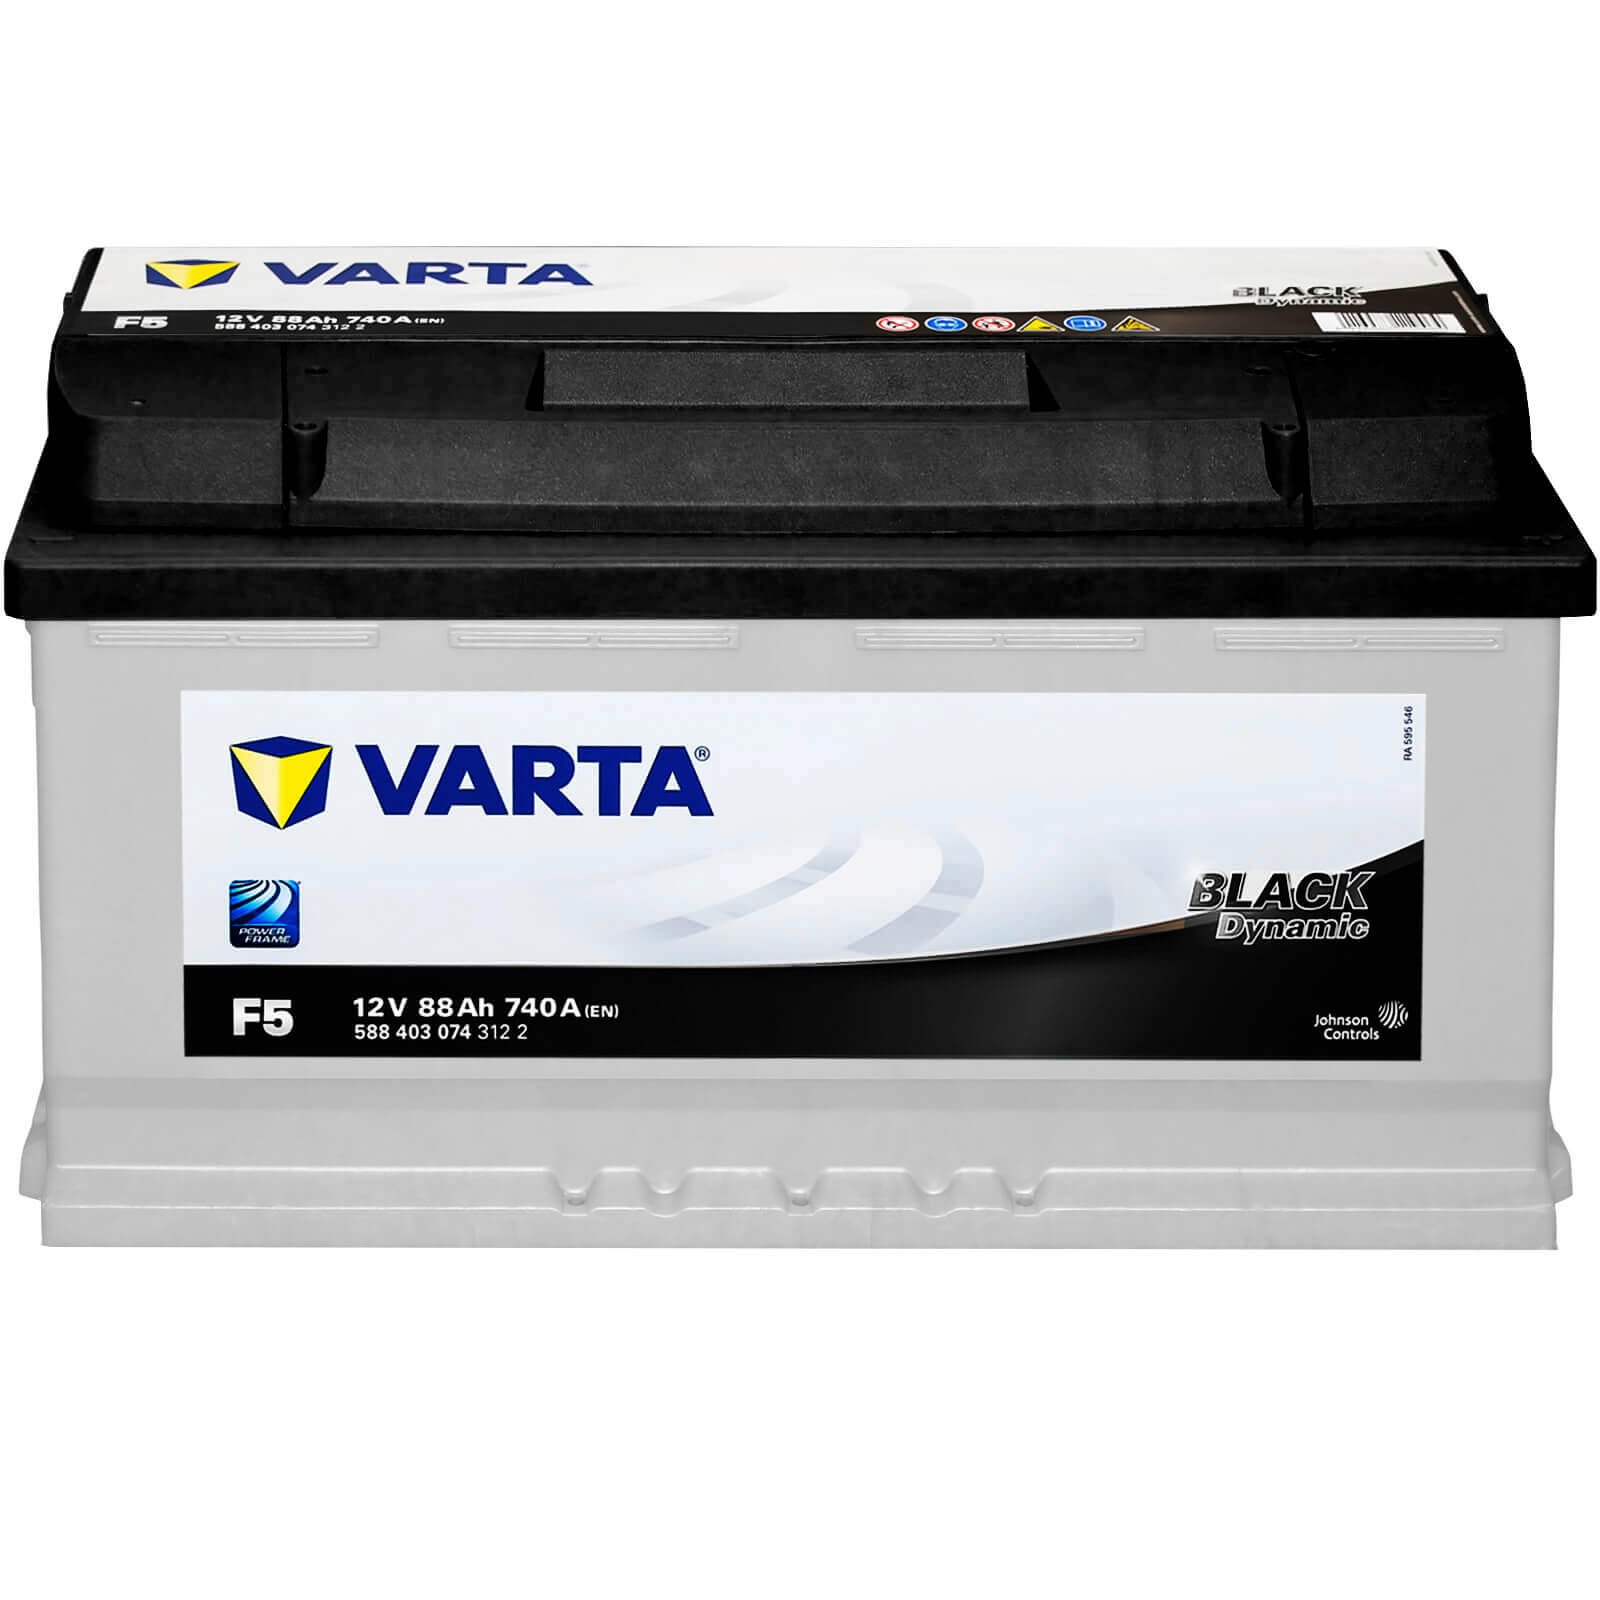 Varta F5 Black Dynamic 12V 88Ah Autobatterie 588403074